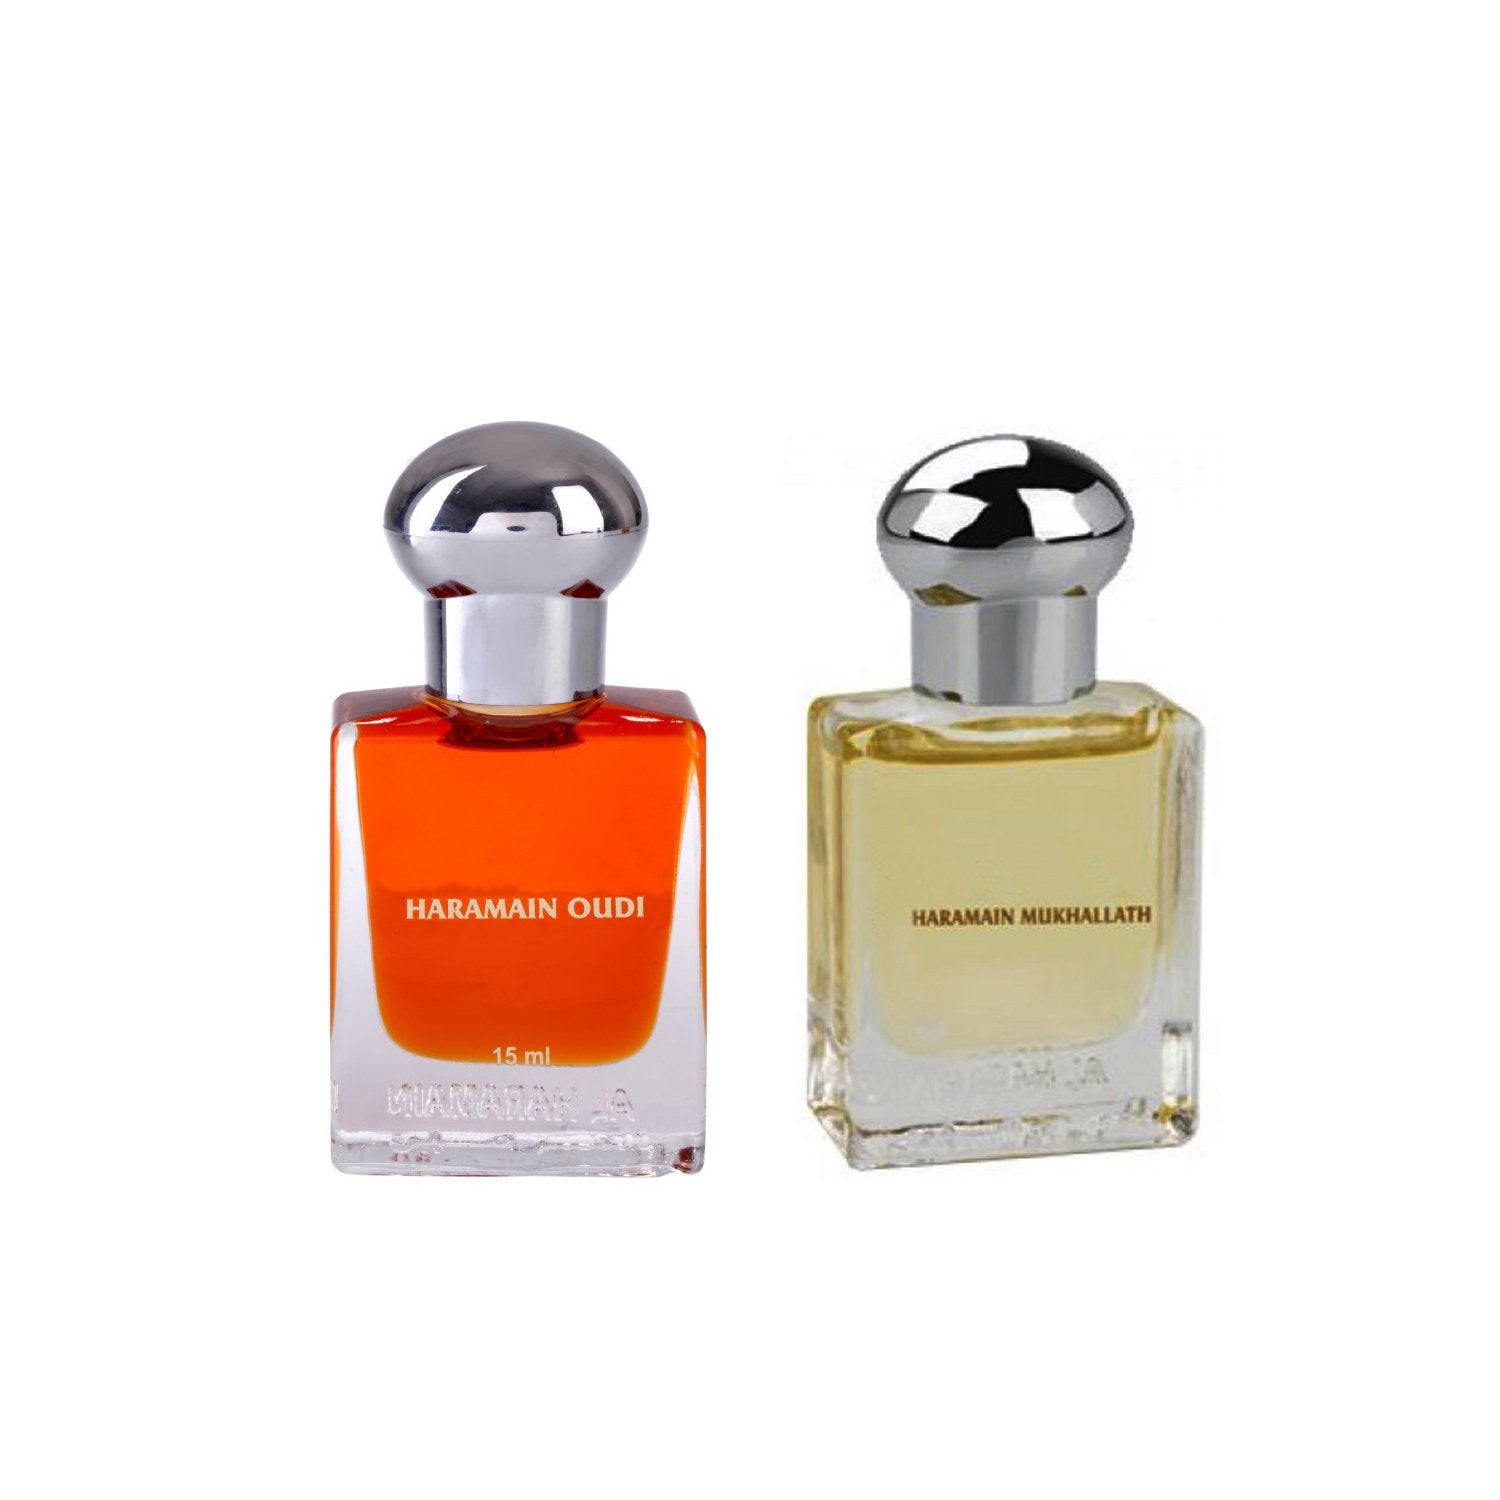 Al Haramain Oudi & Mukhallath Fragrance Pure Original Roll on Perfume Oil Pack of 2 (Attar) - 2 x 15 ml